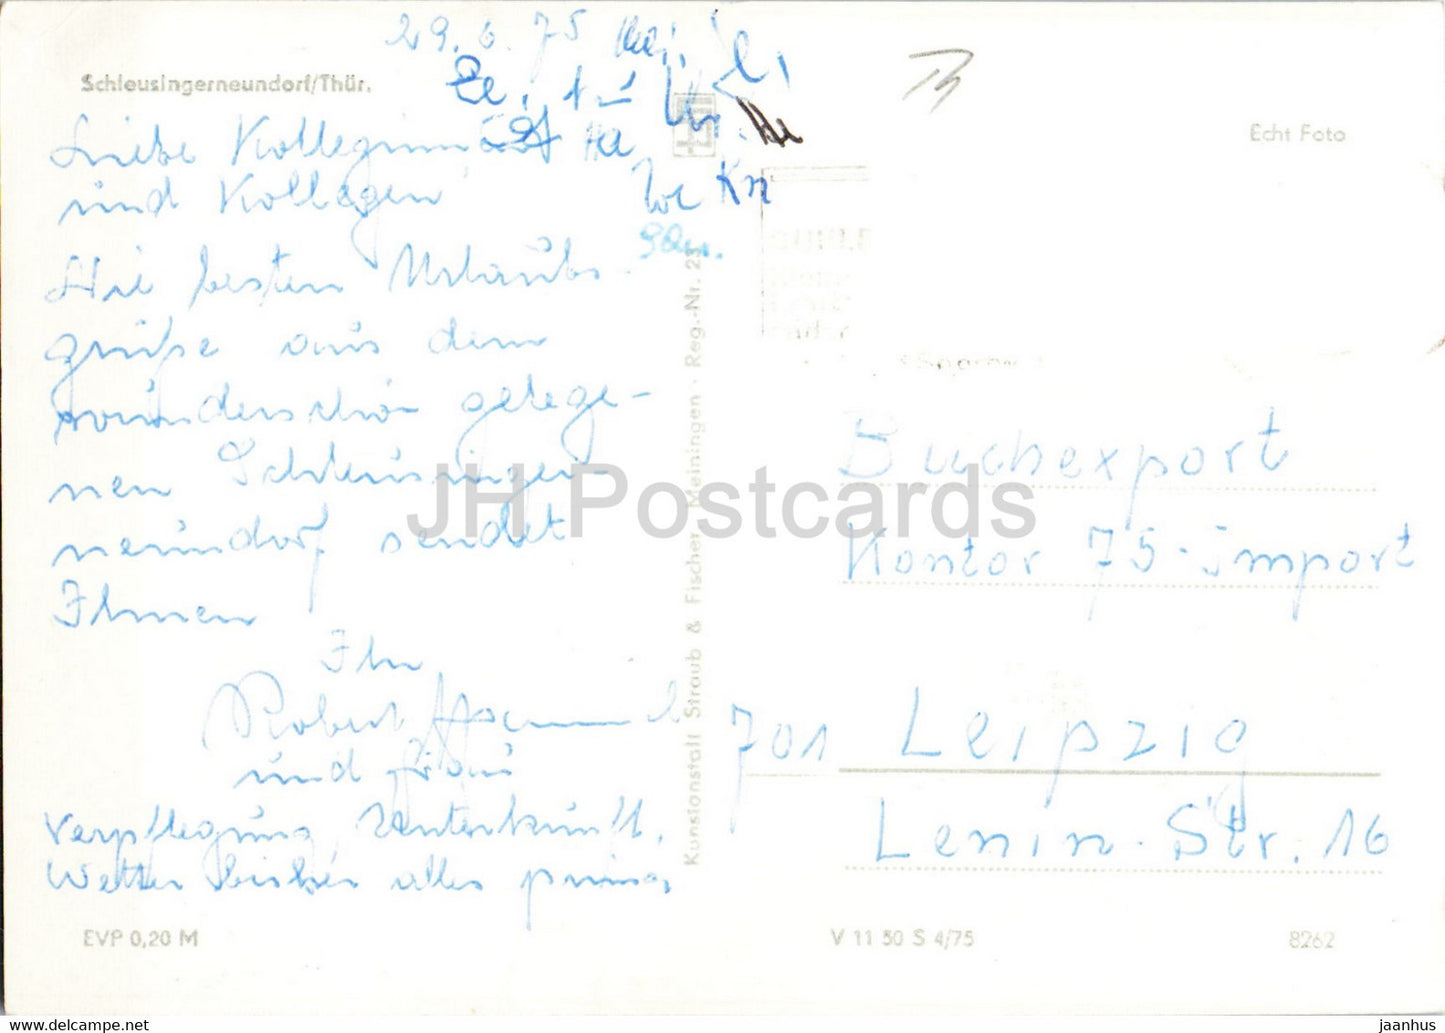 Schleusingerneundorf - Thur - old postcard - 1975 - Germany DDR - used